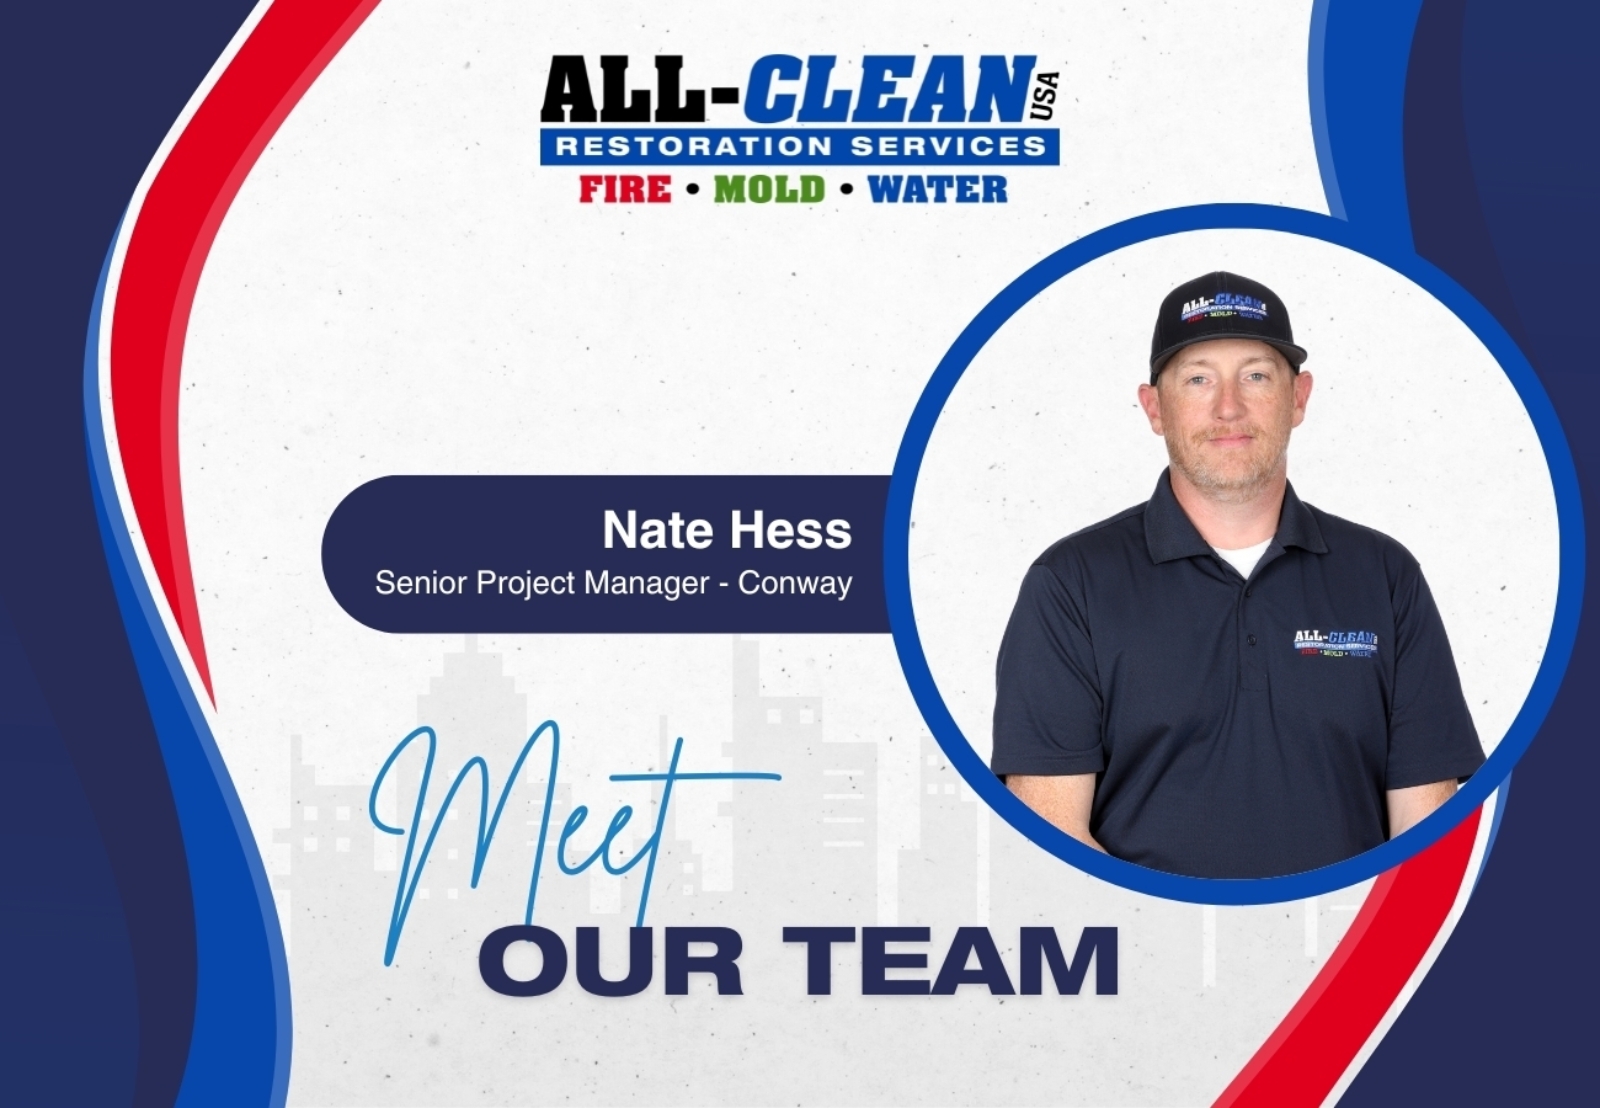 Meet the Team - Introducing Nate Hess